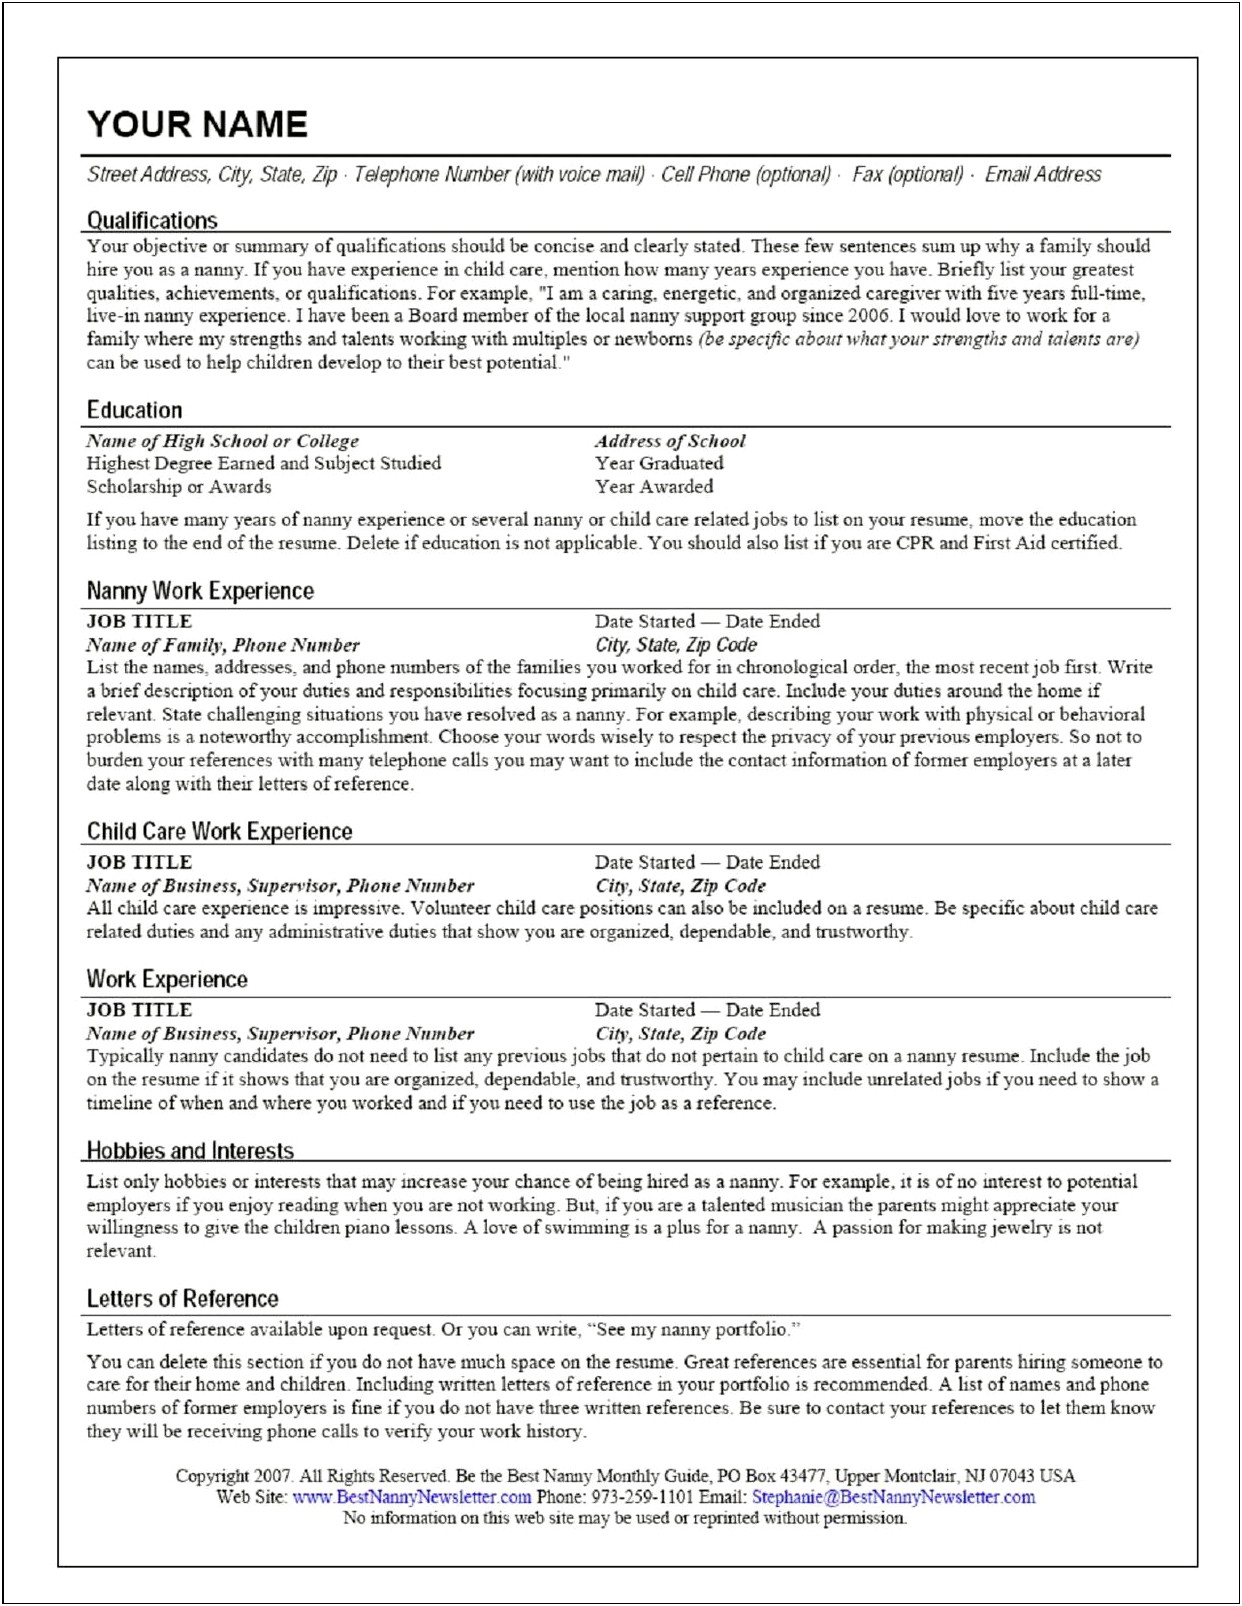 Nanny Jobs Description For Resume